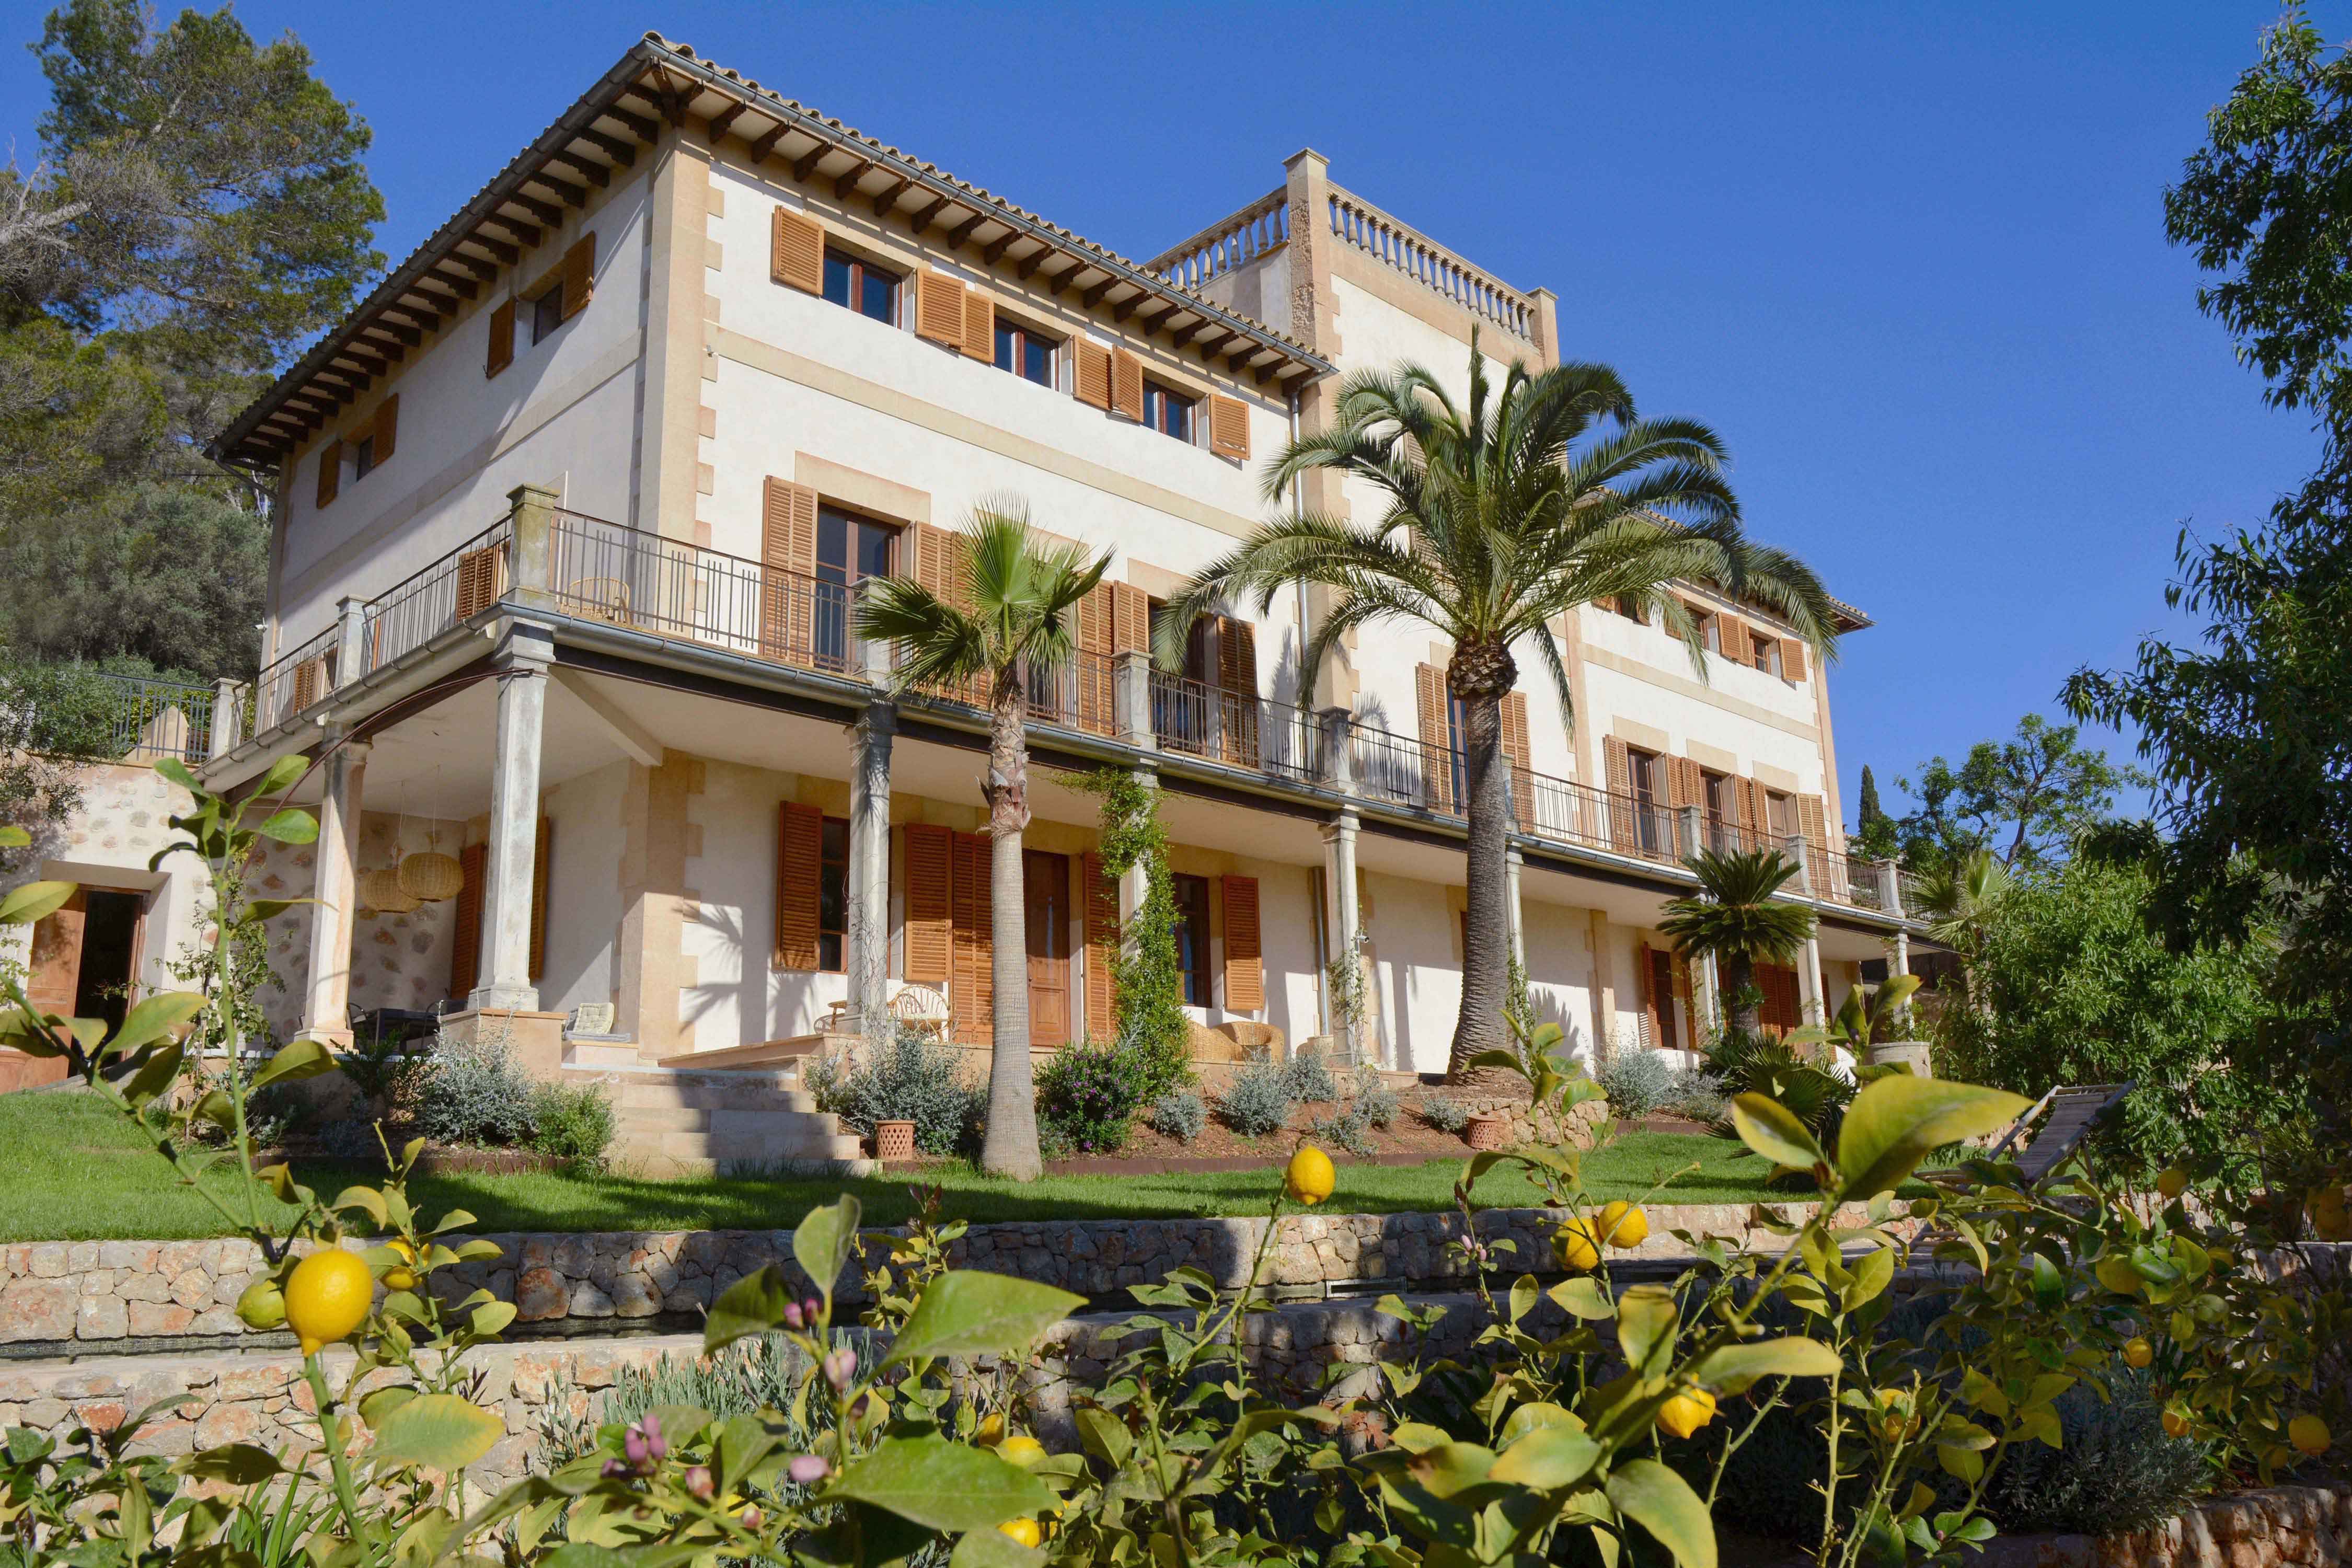 The best villas for group holidays | Villa Havana, Mallorca | Mr & Mrs Smith Editorial 